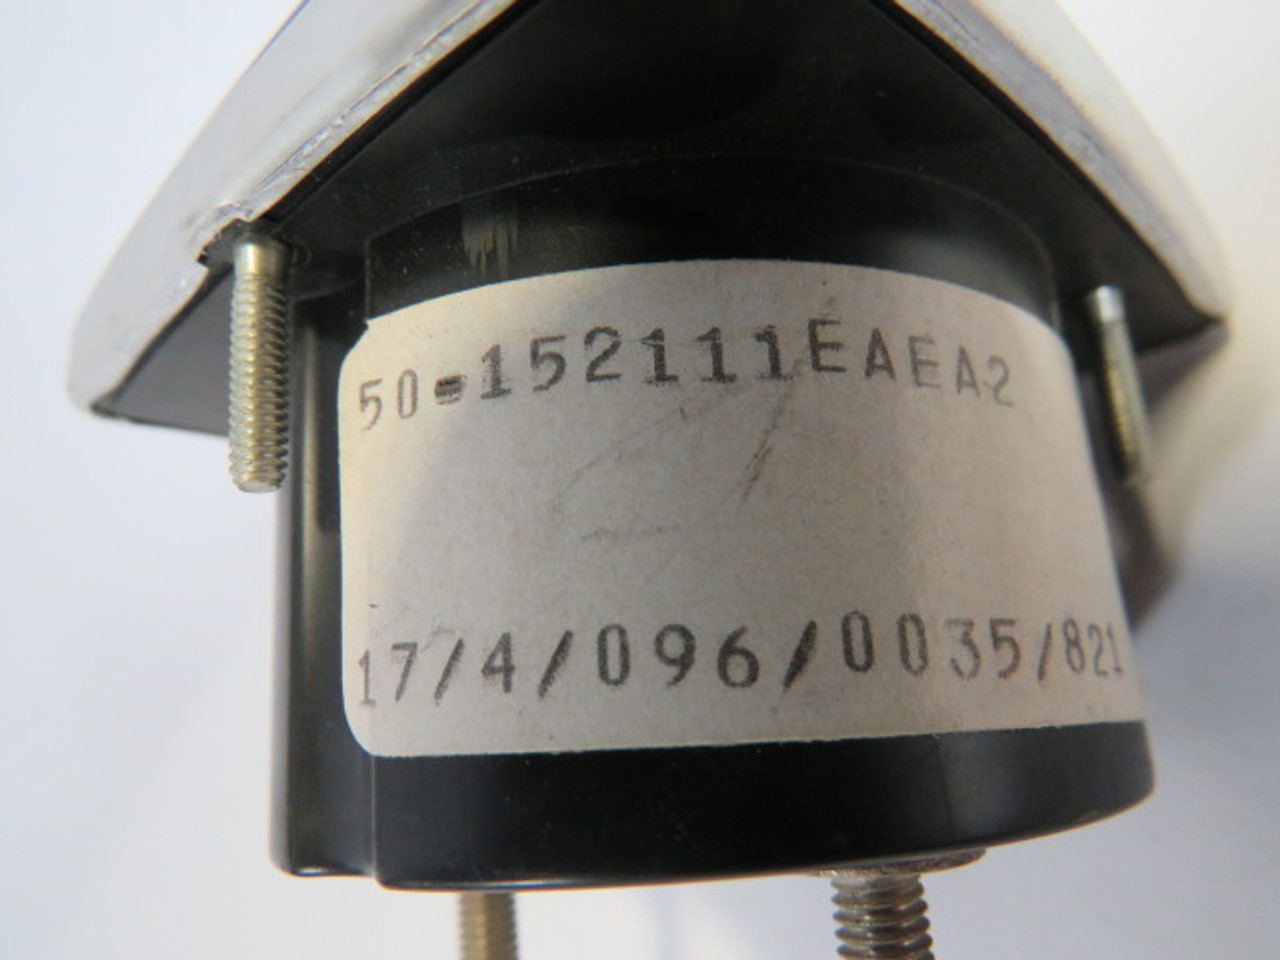 General Electric 50-152111EAEA2 Panel Meter 0-200DC Microamps USED